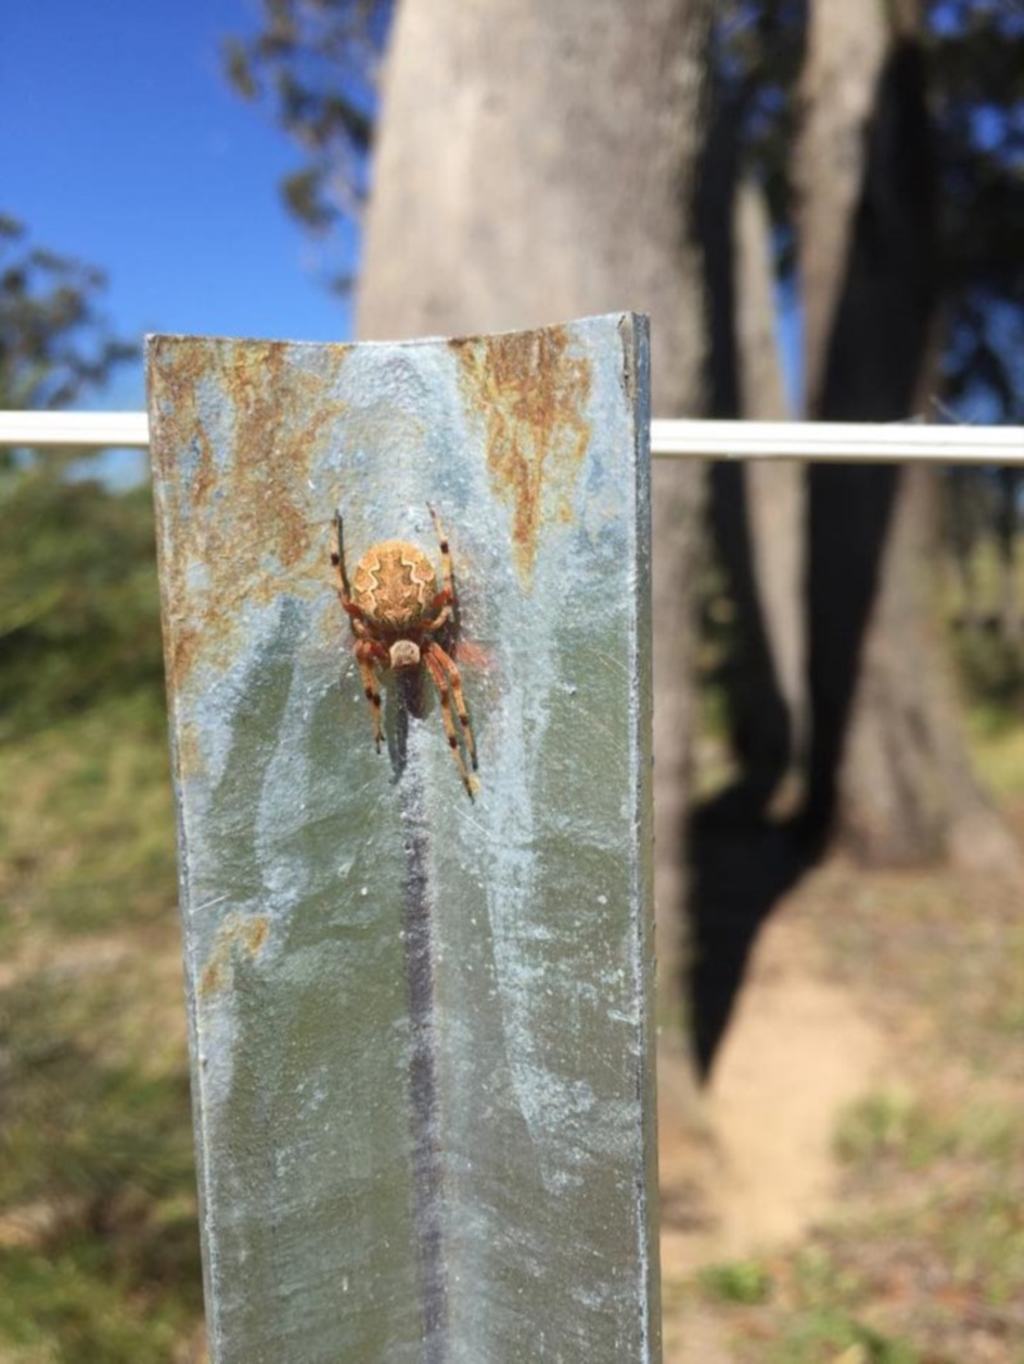 Araneus hamiltoni at Penrose, NSW - 30 Dec 2014